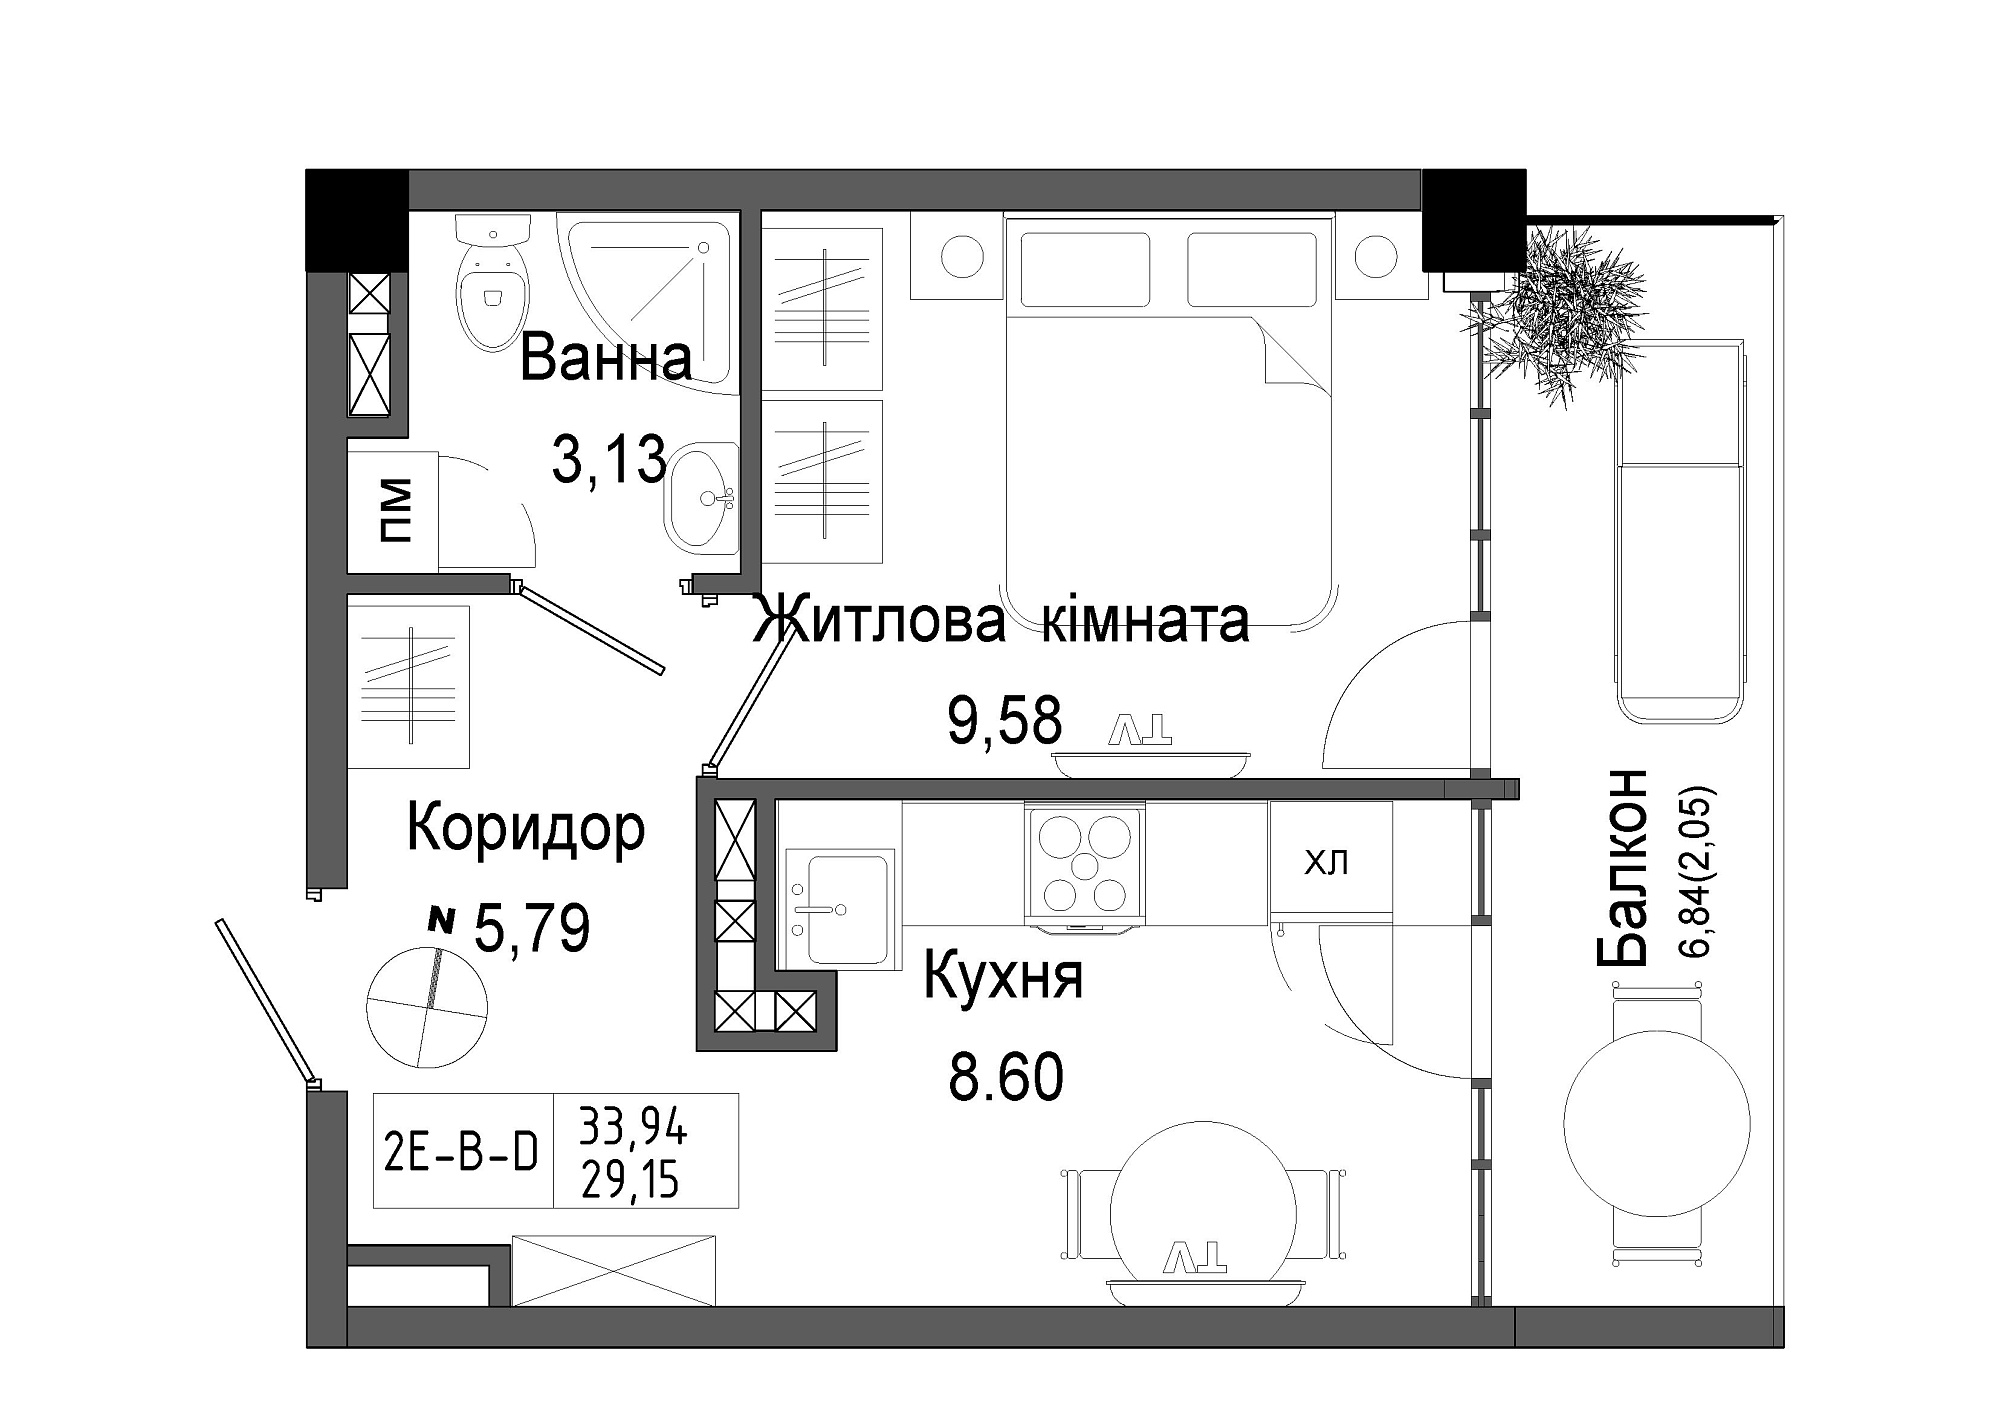 Planning 1-rm flats area 29.15m2, UM-006-08/0003.